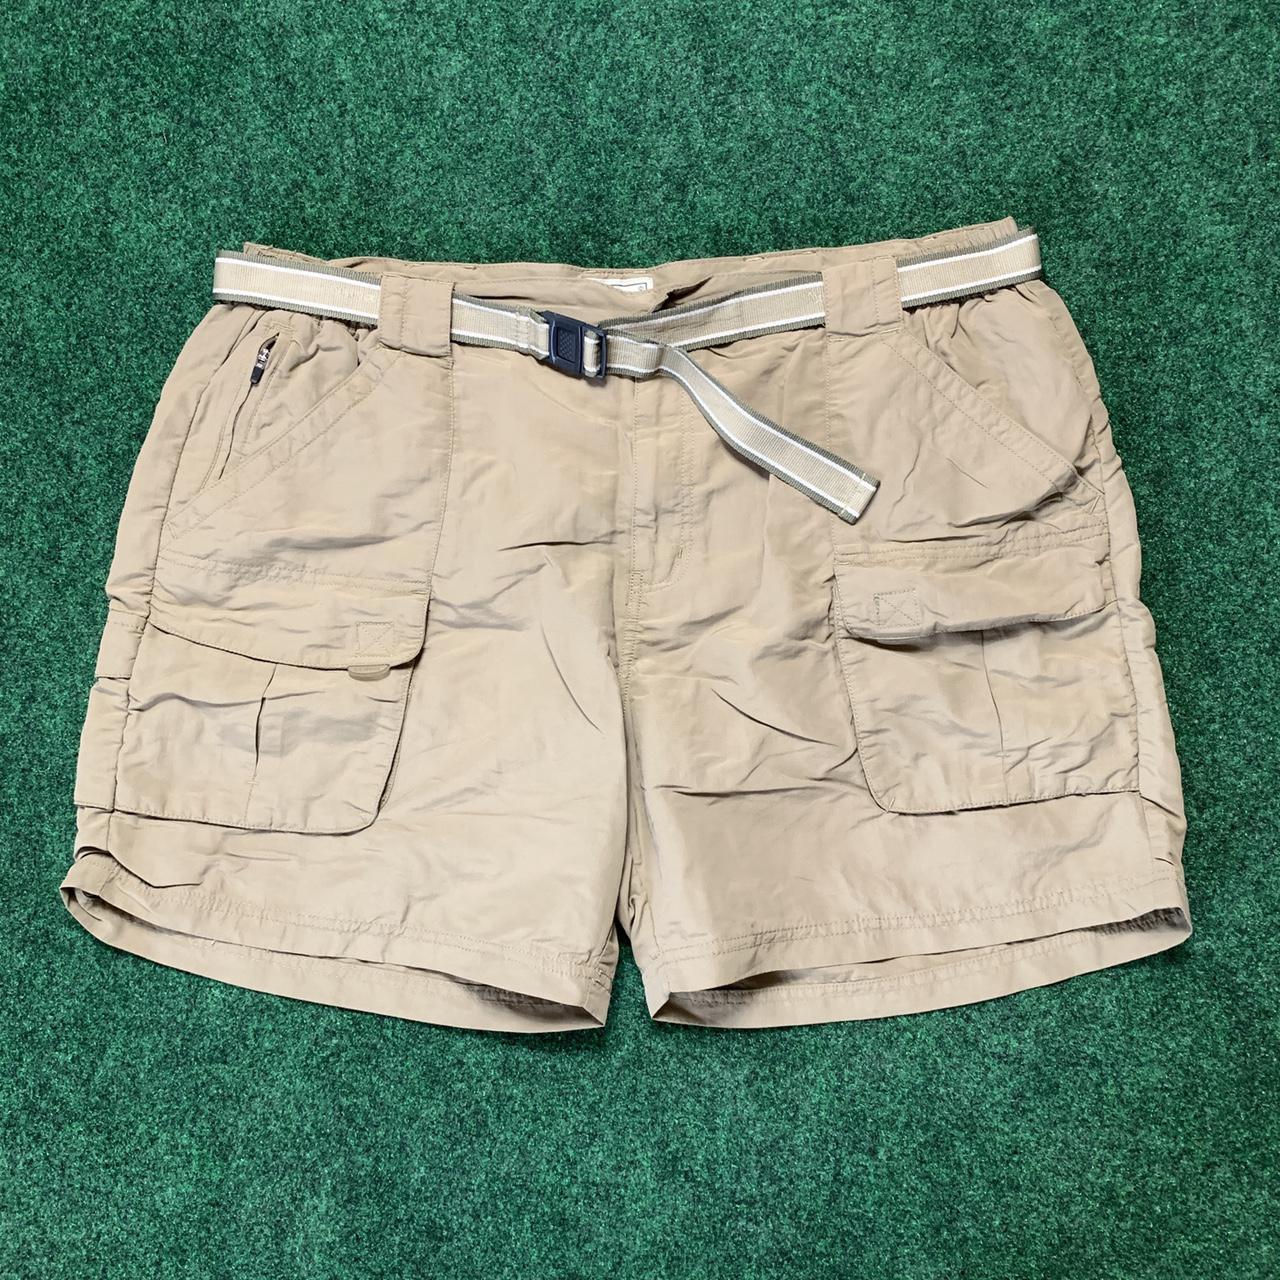 L.L.Bean cargo khaki short shorts with drawstring... - Depop